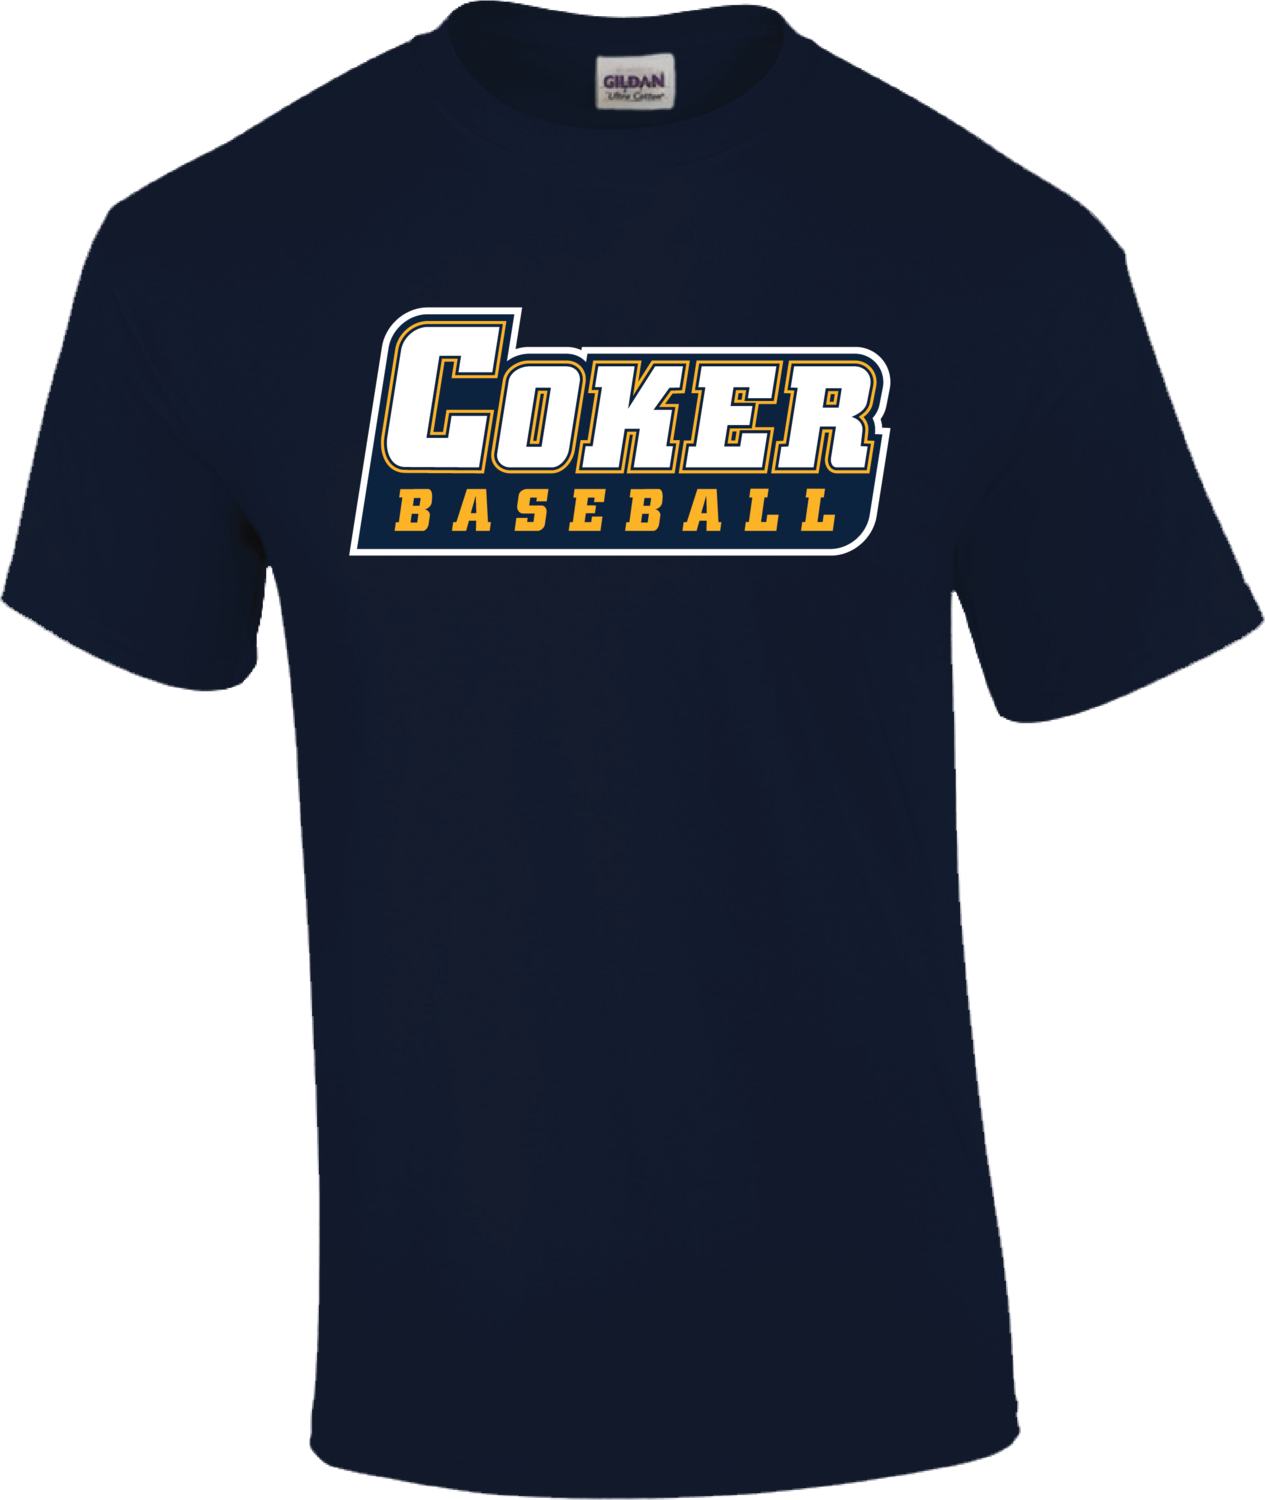 Gildan Coker Baseball (Navy), size: Small